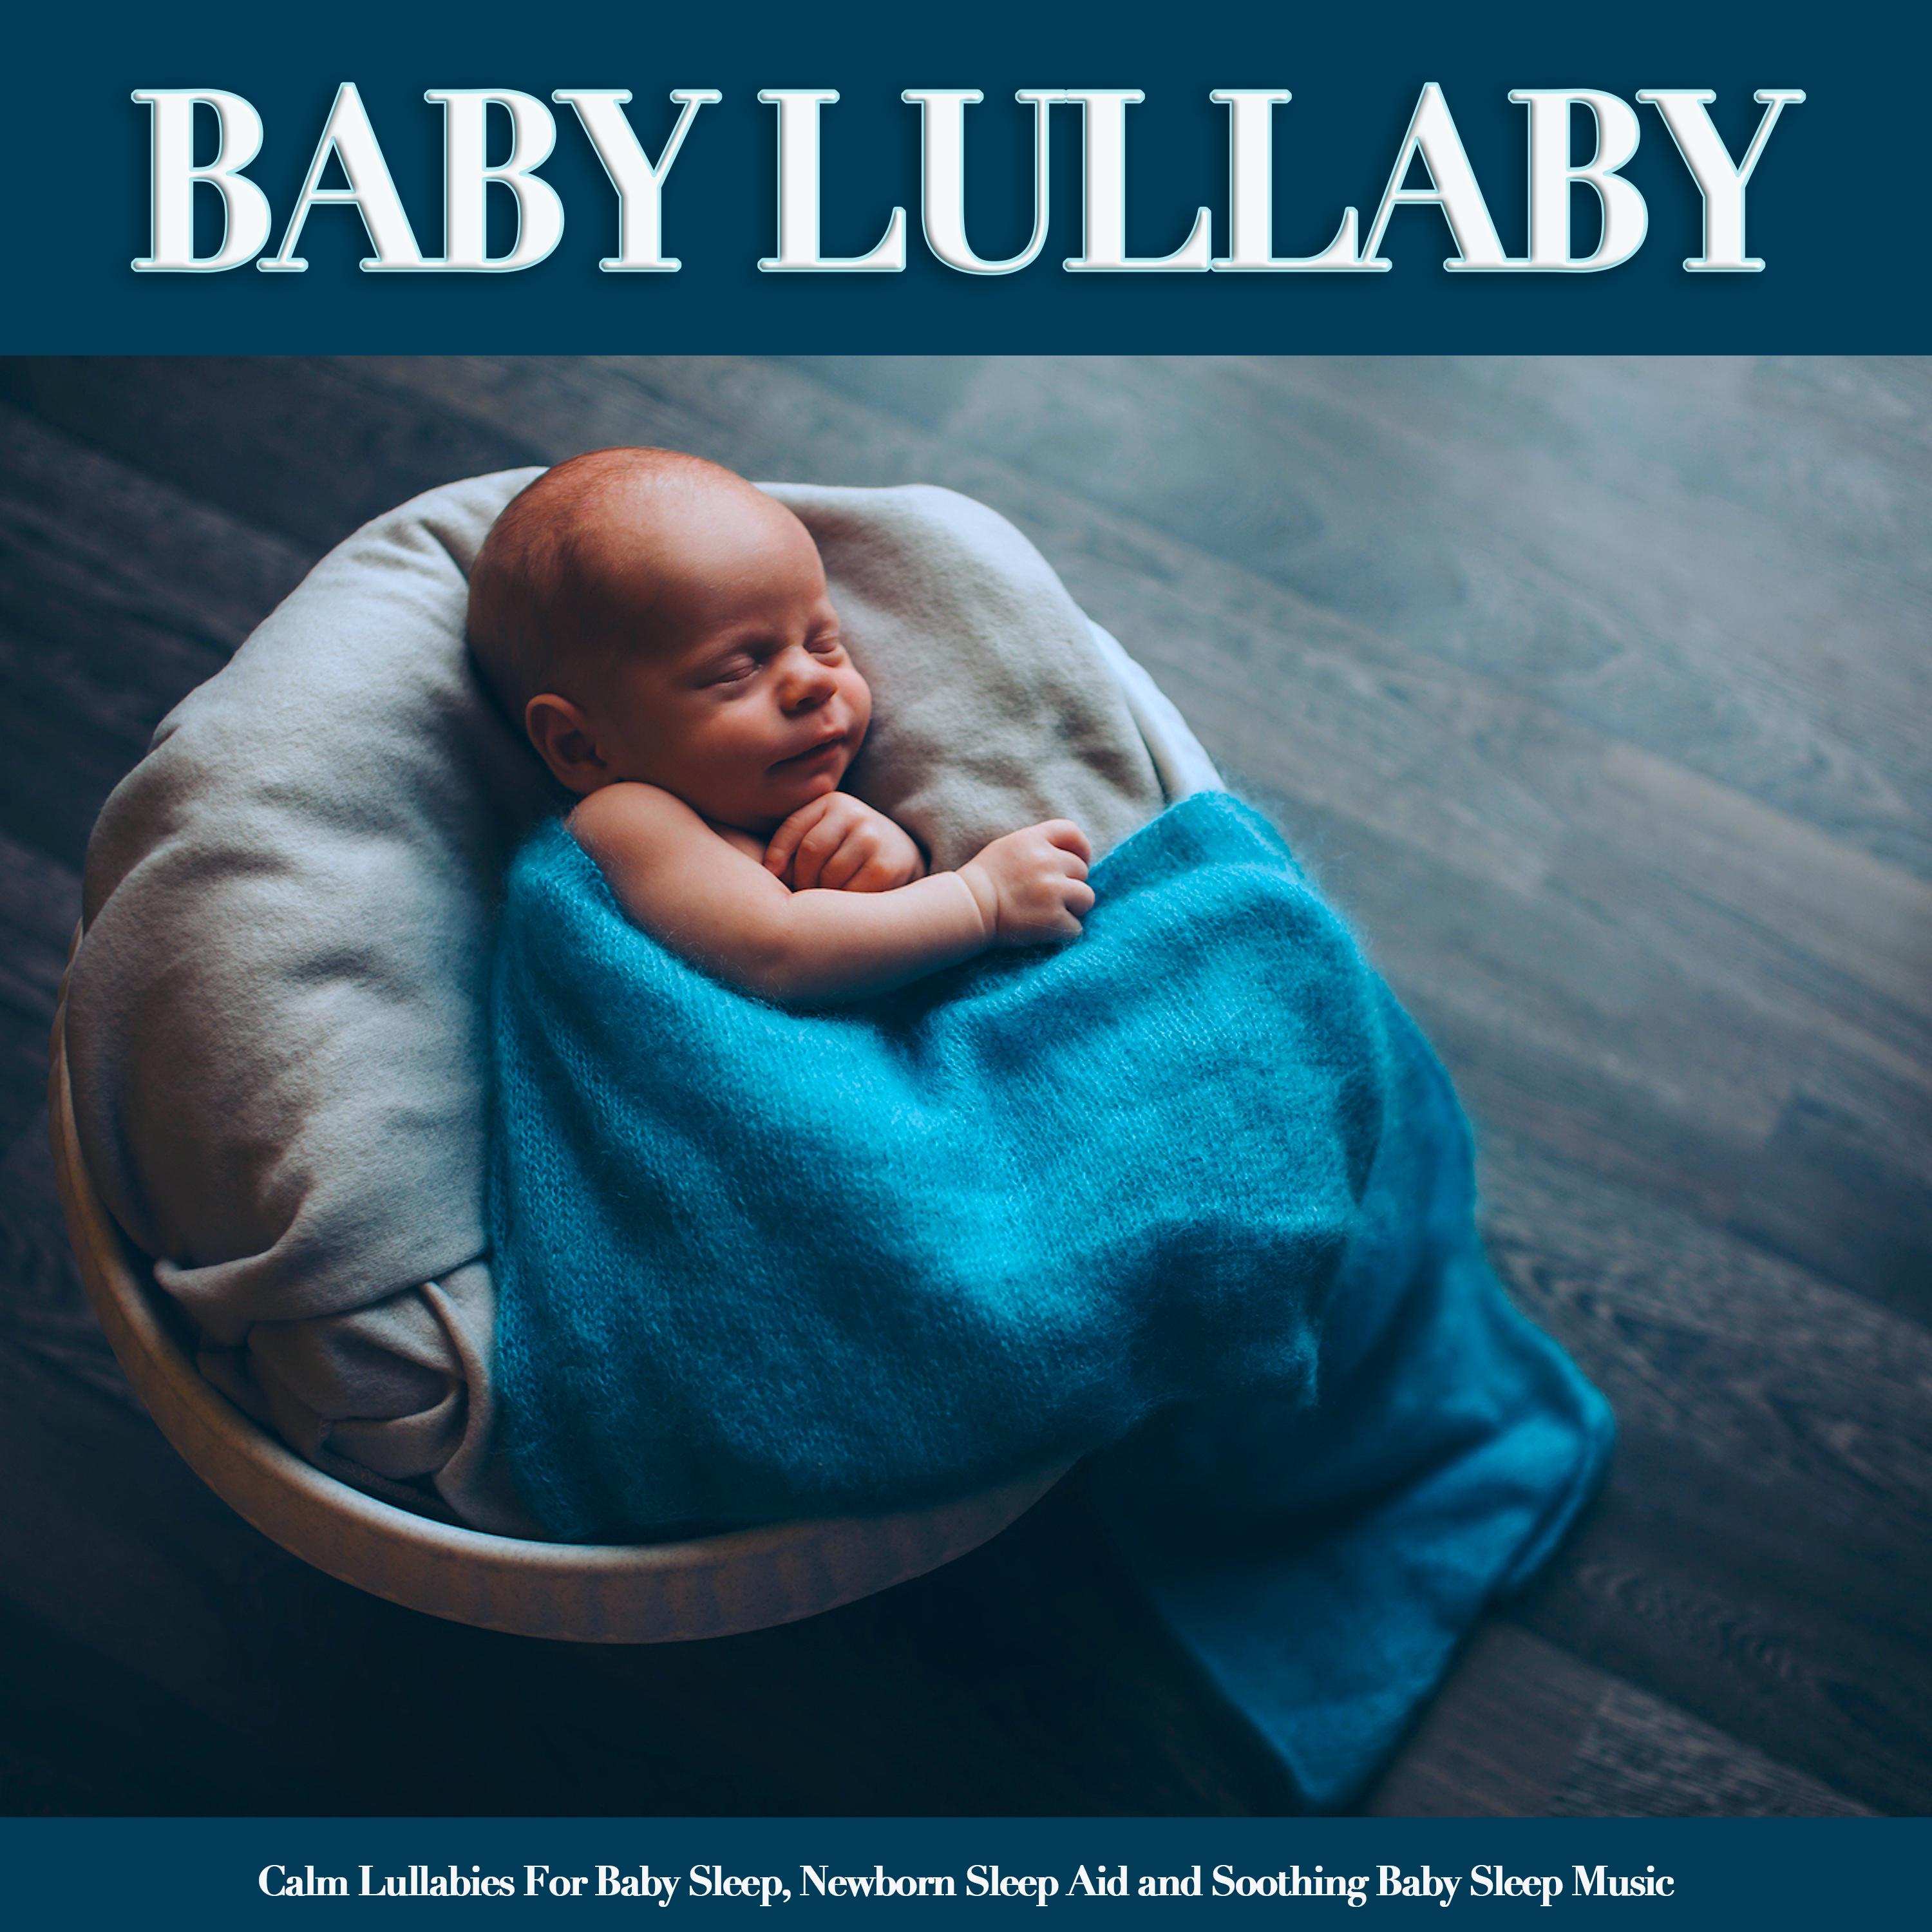 Baby Lullaby: Calm Lullabies For Baby Sleep, Newborn Sleep Aid and Soothing Baby Sleep Music